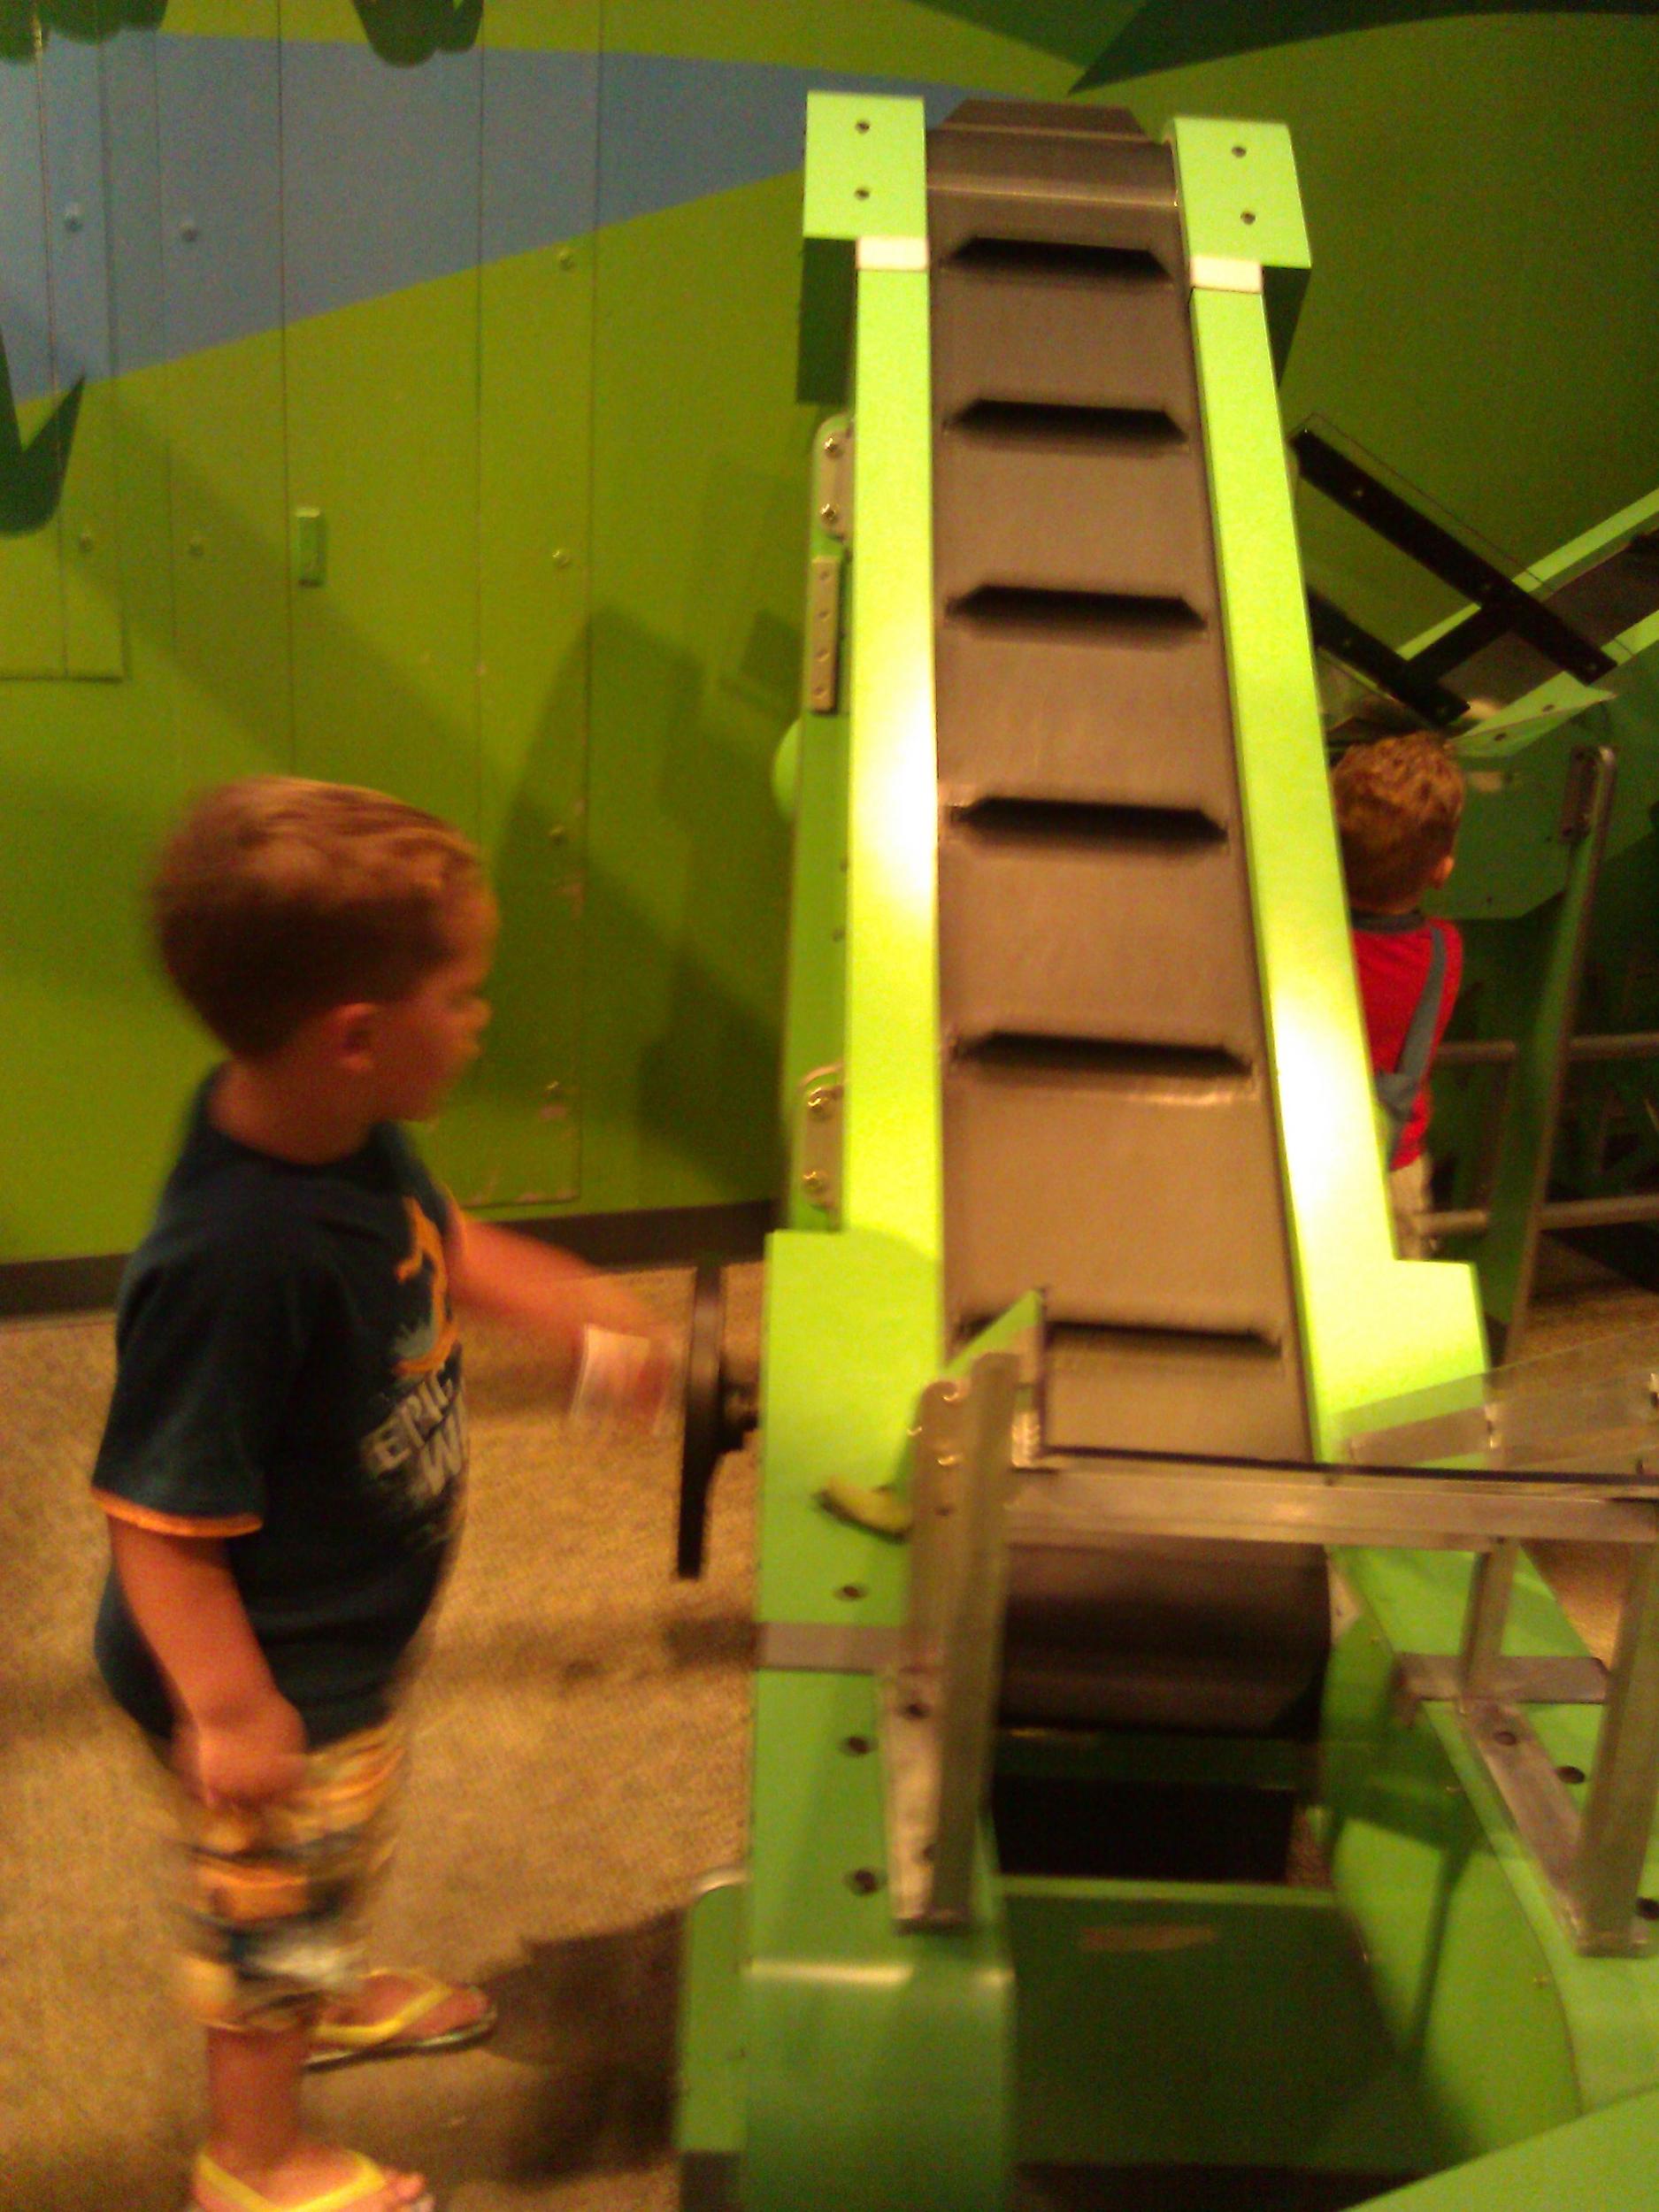 Working the conveyer belt.